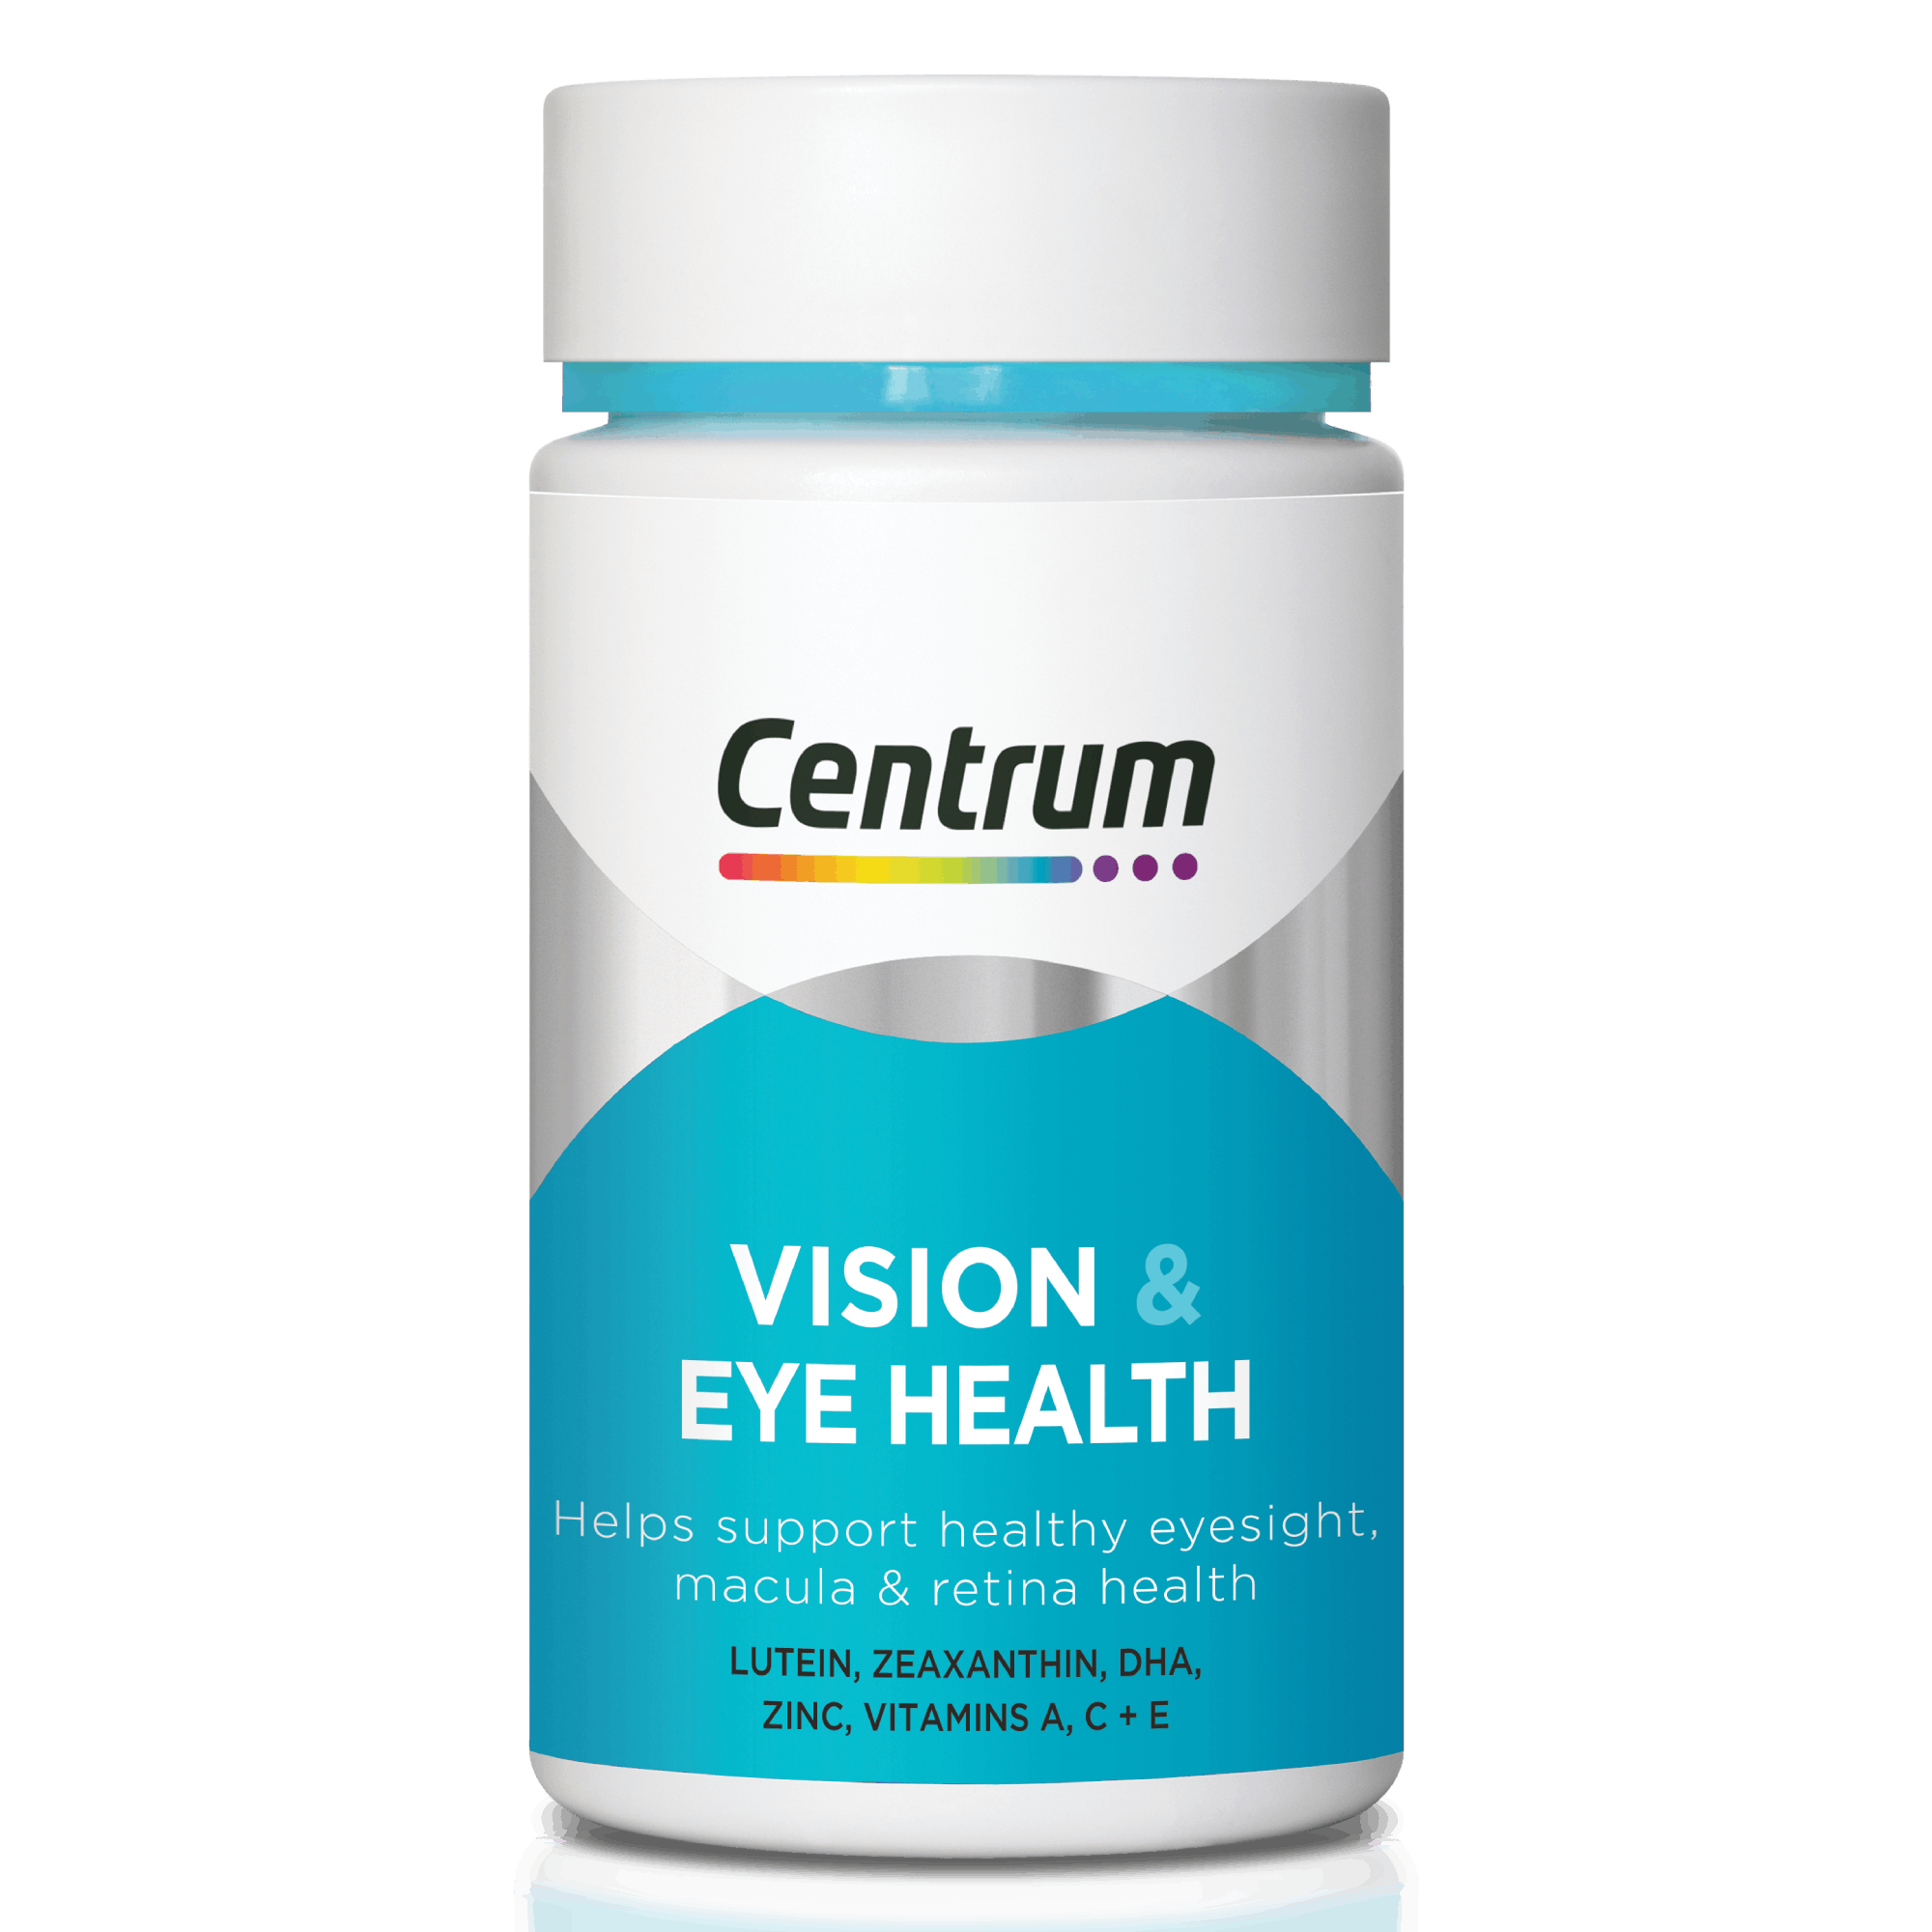 Box of Centrum Vision & Eye Health